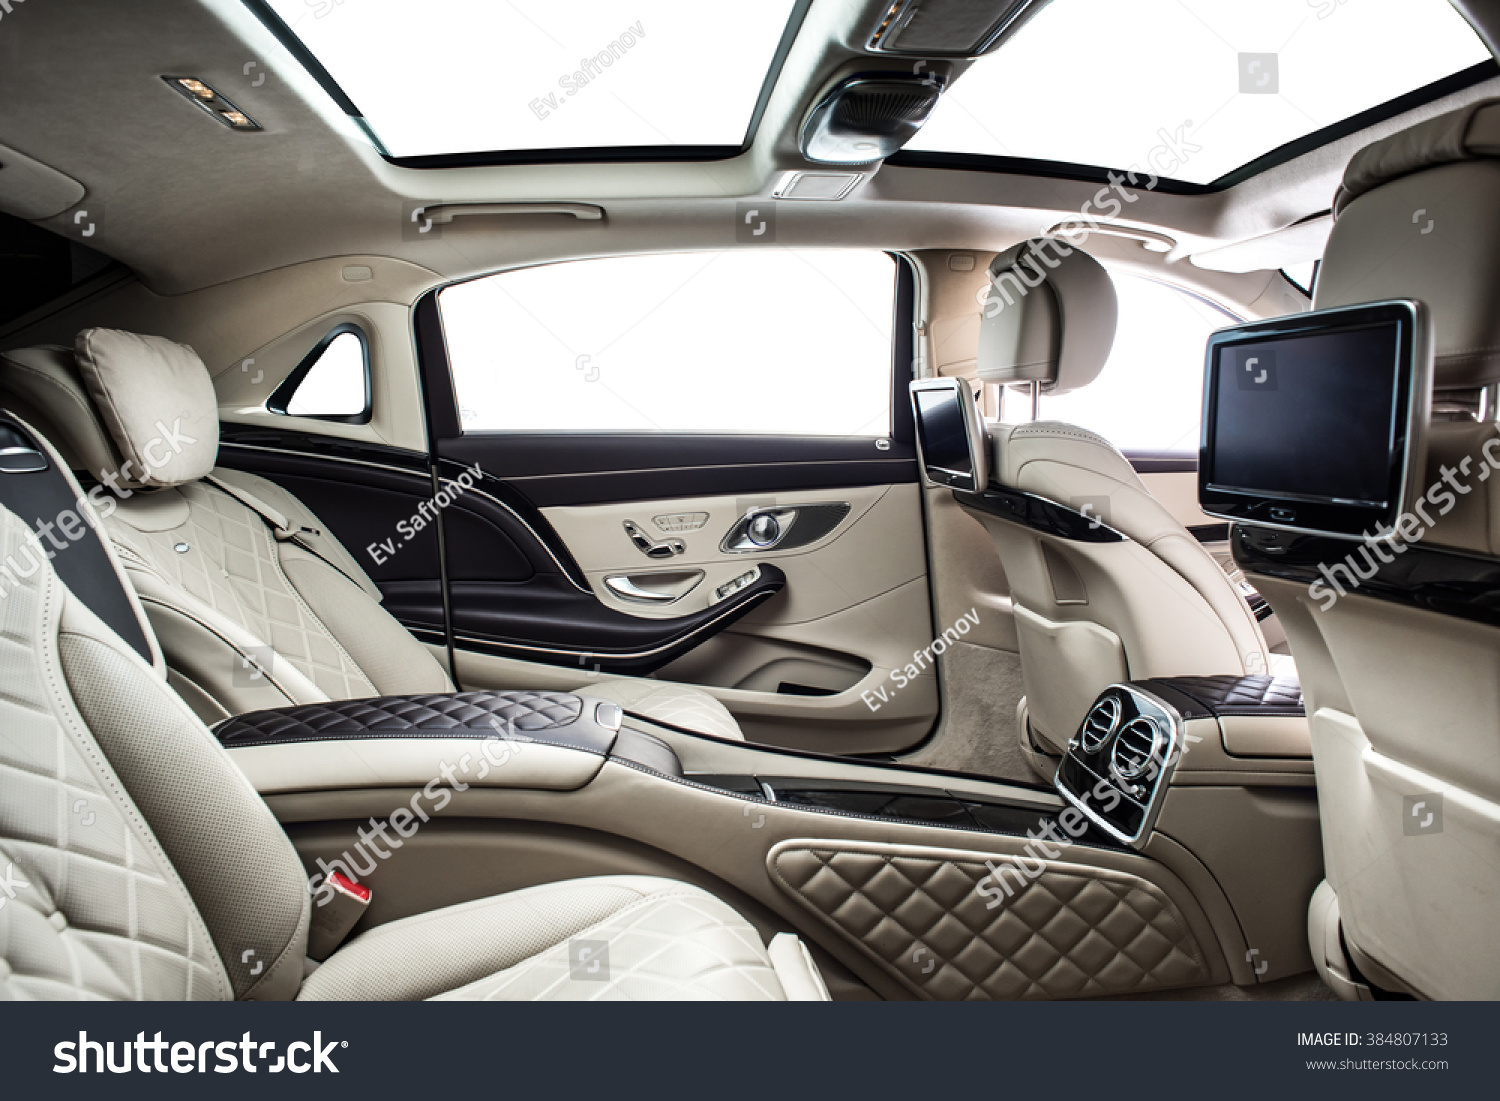 Car interior luxury rear seat
wealth